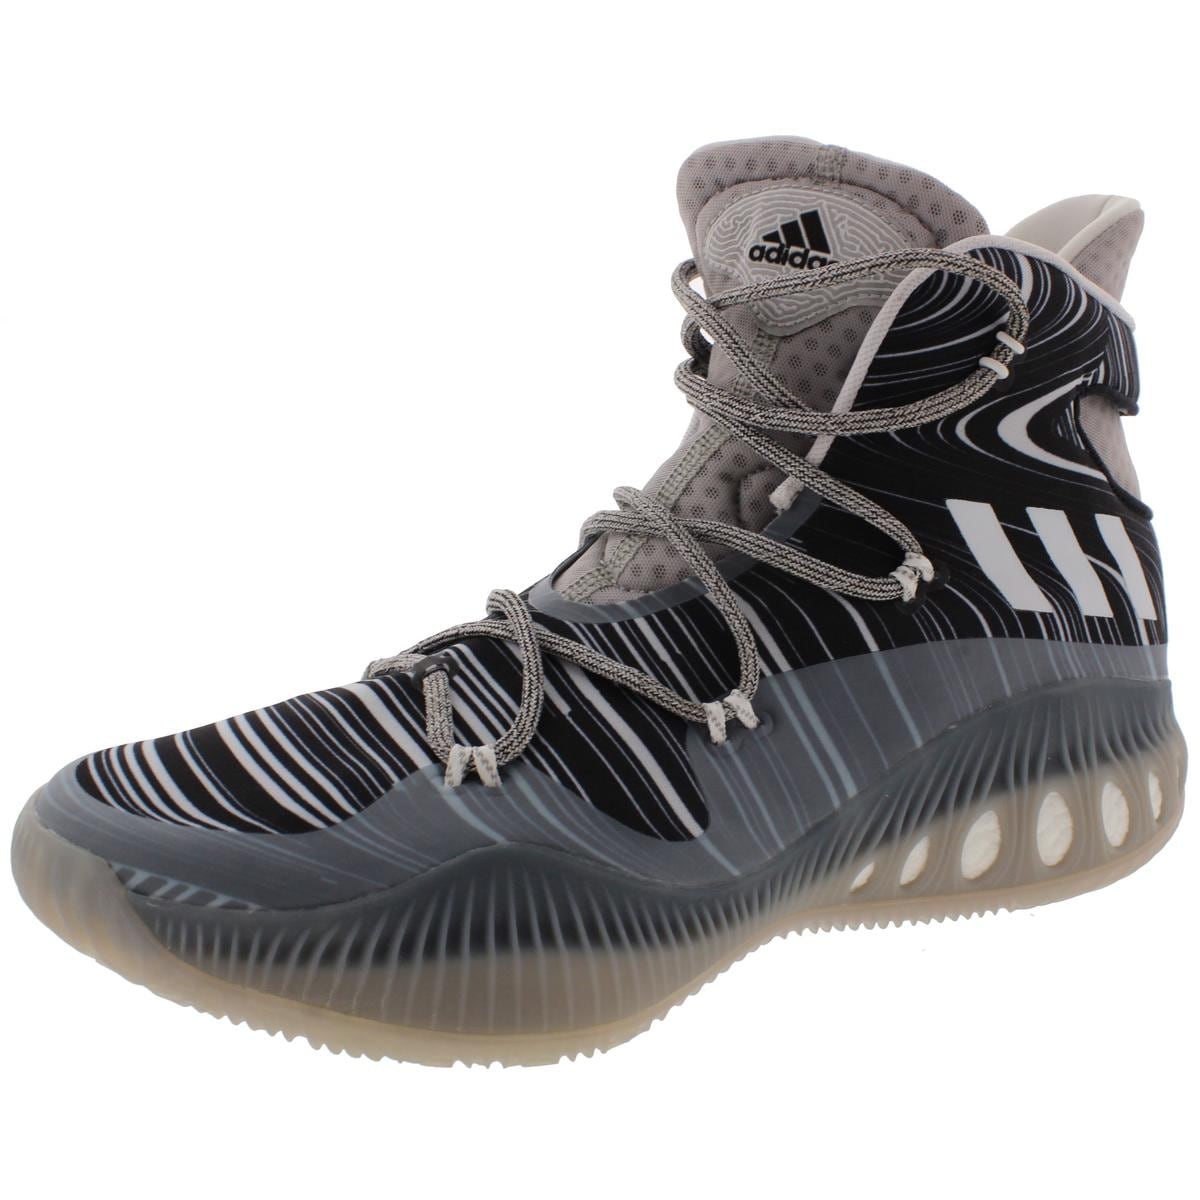 adidas crazy explosive basketball shoes